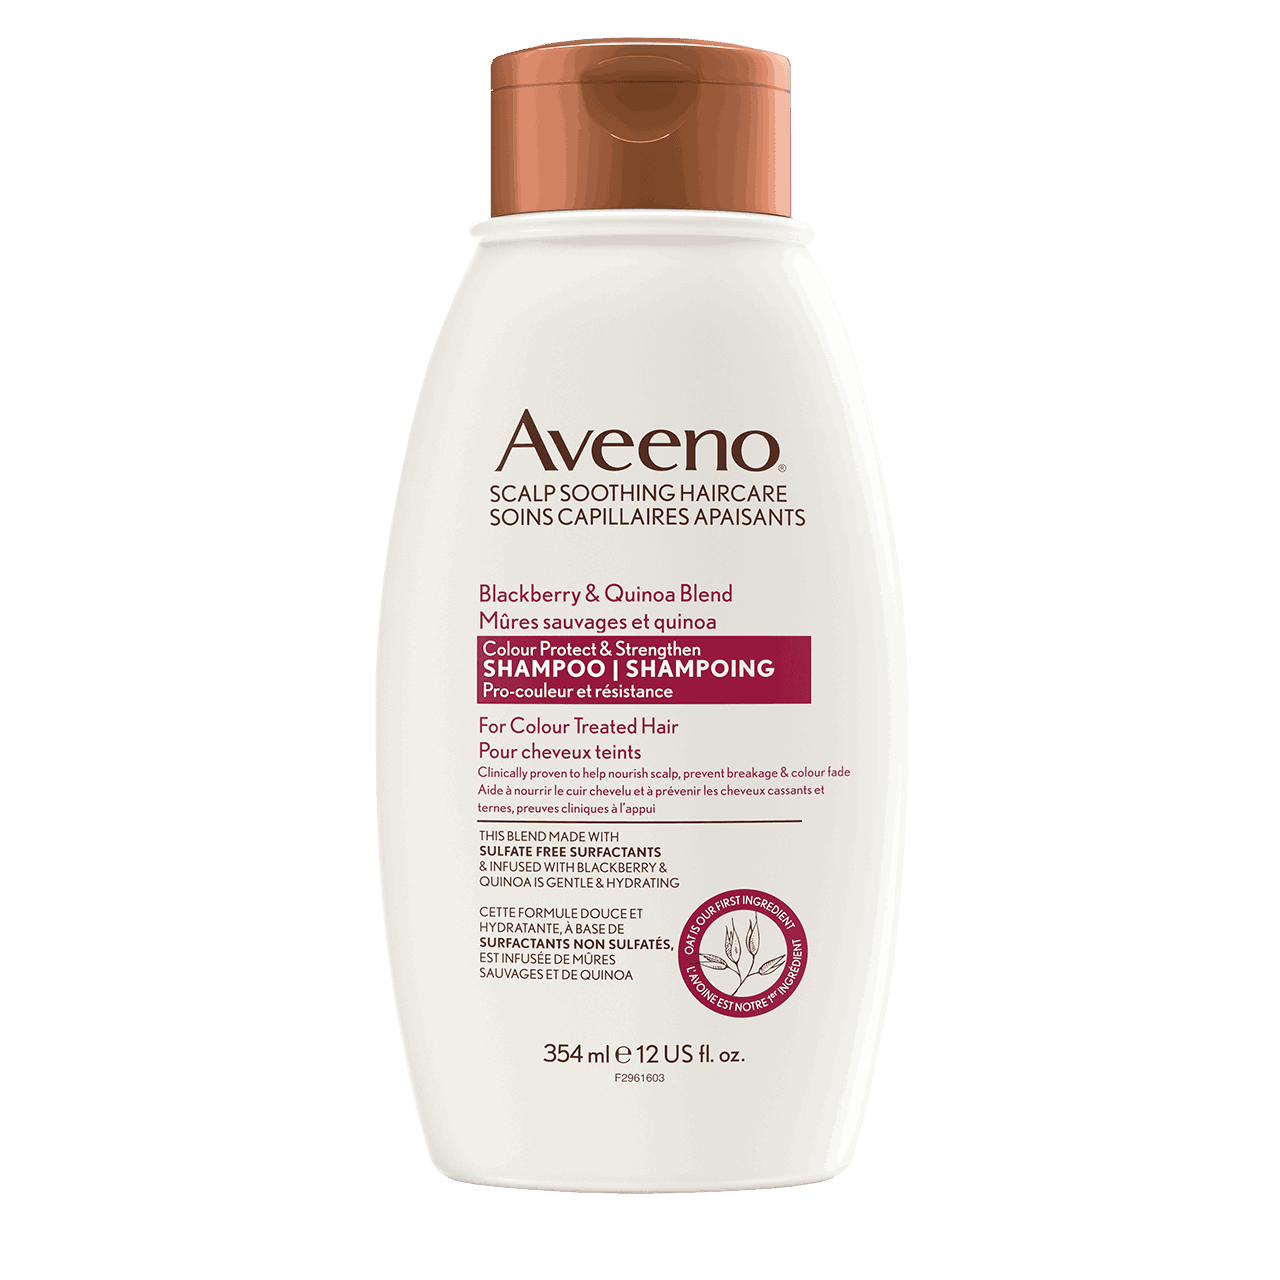 AVEENO® Blackberry Quinoa Blend Shampoo, 354ml bottle, back label